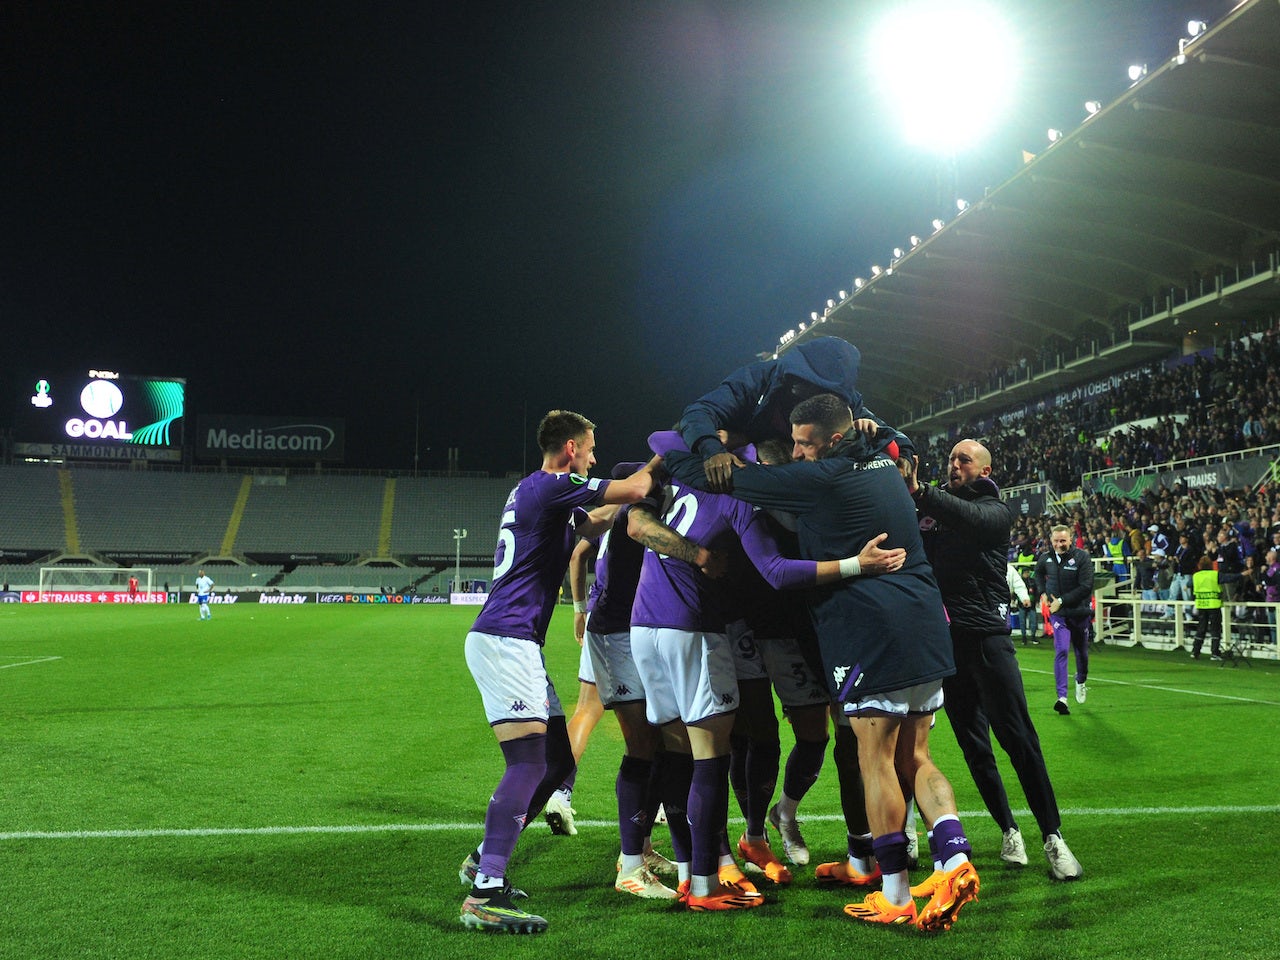  Ferencvarosi TC vs Fiorentina Prediction, Preview & H2H Stats